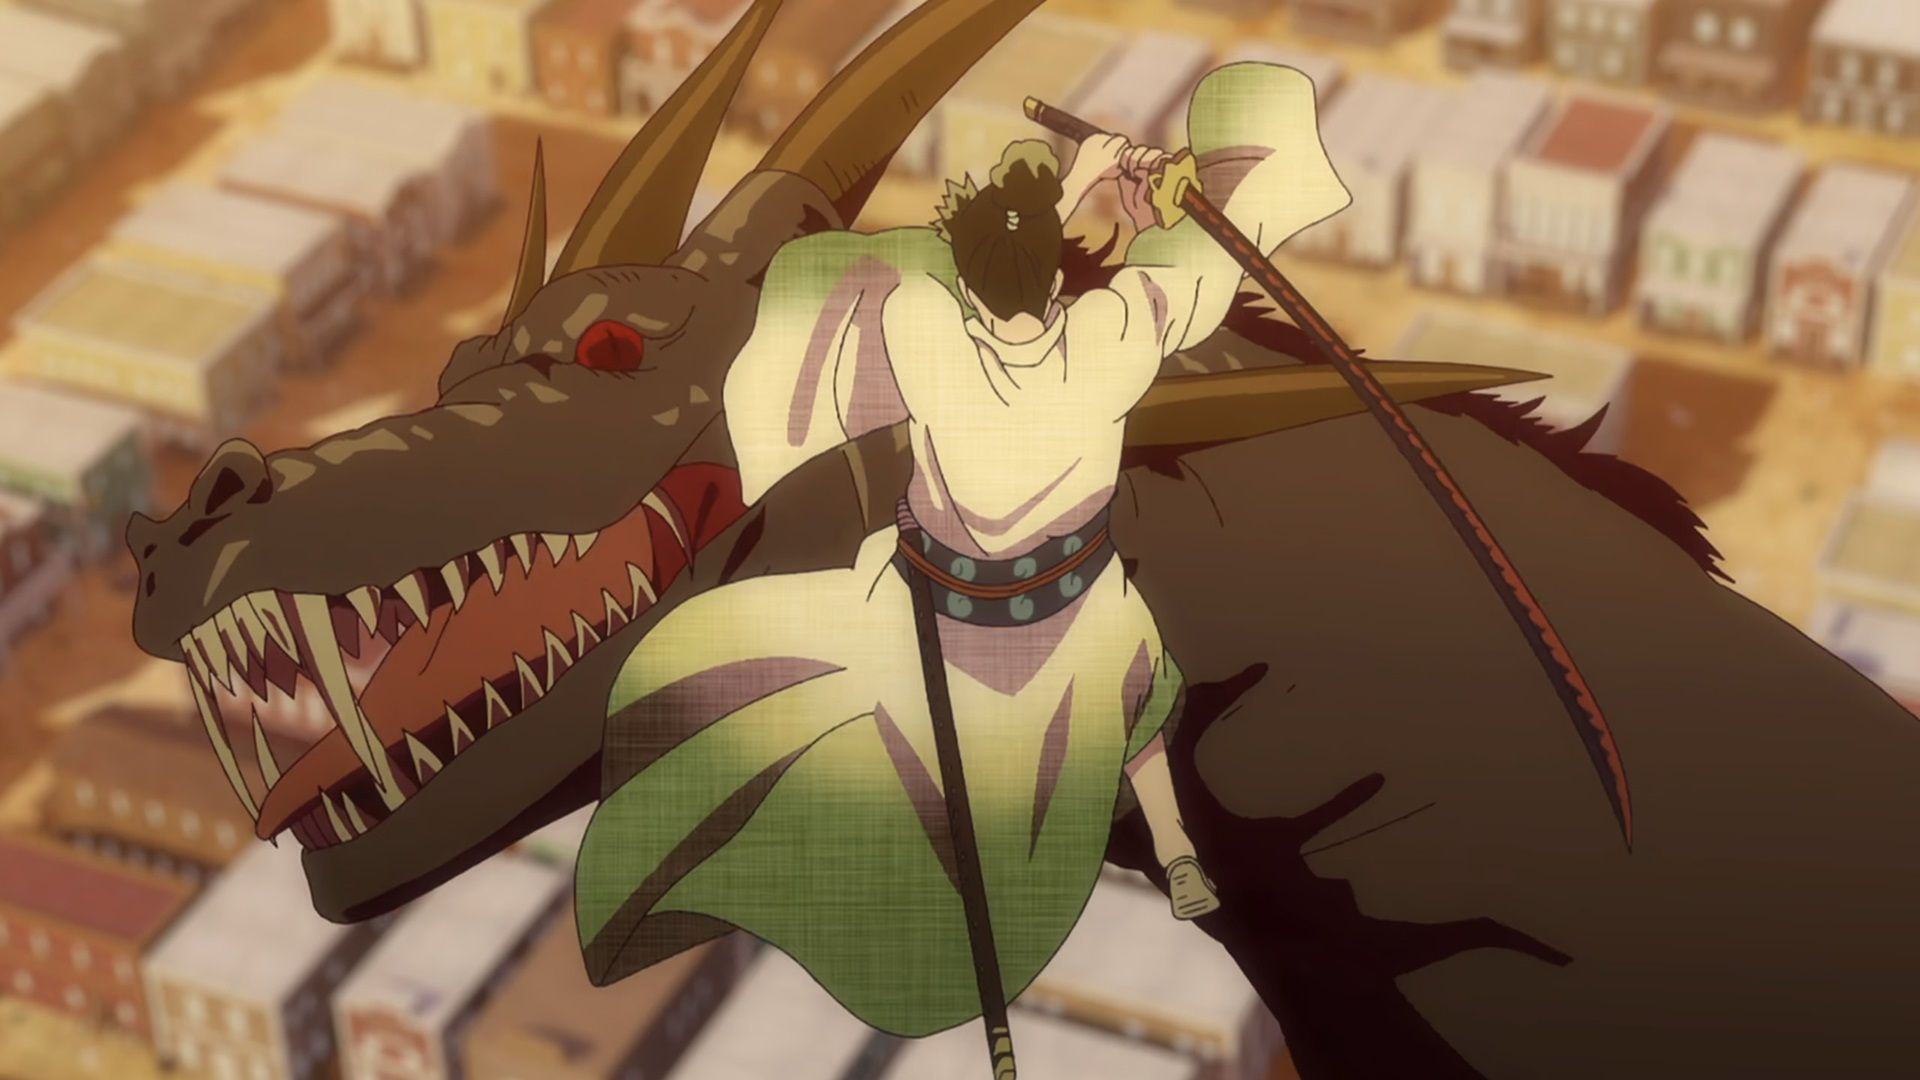 Ryuma killing the evil dragon in Monsters (Image via E&amp;H Production)